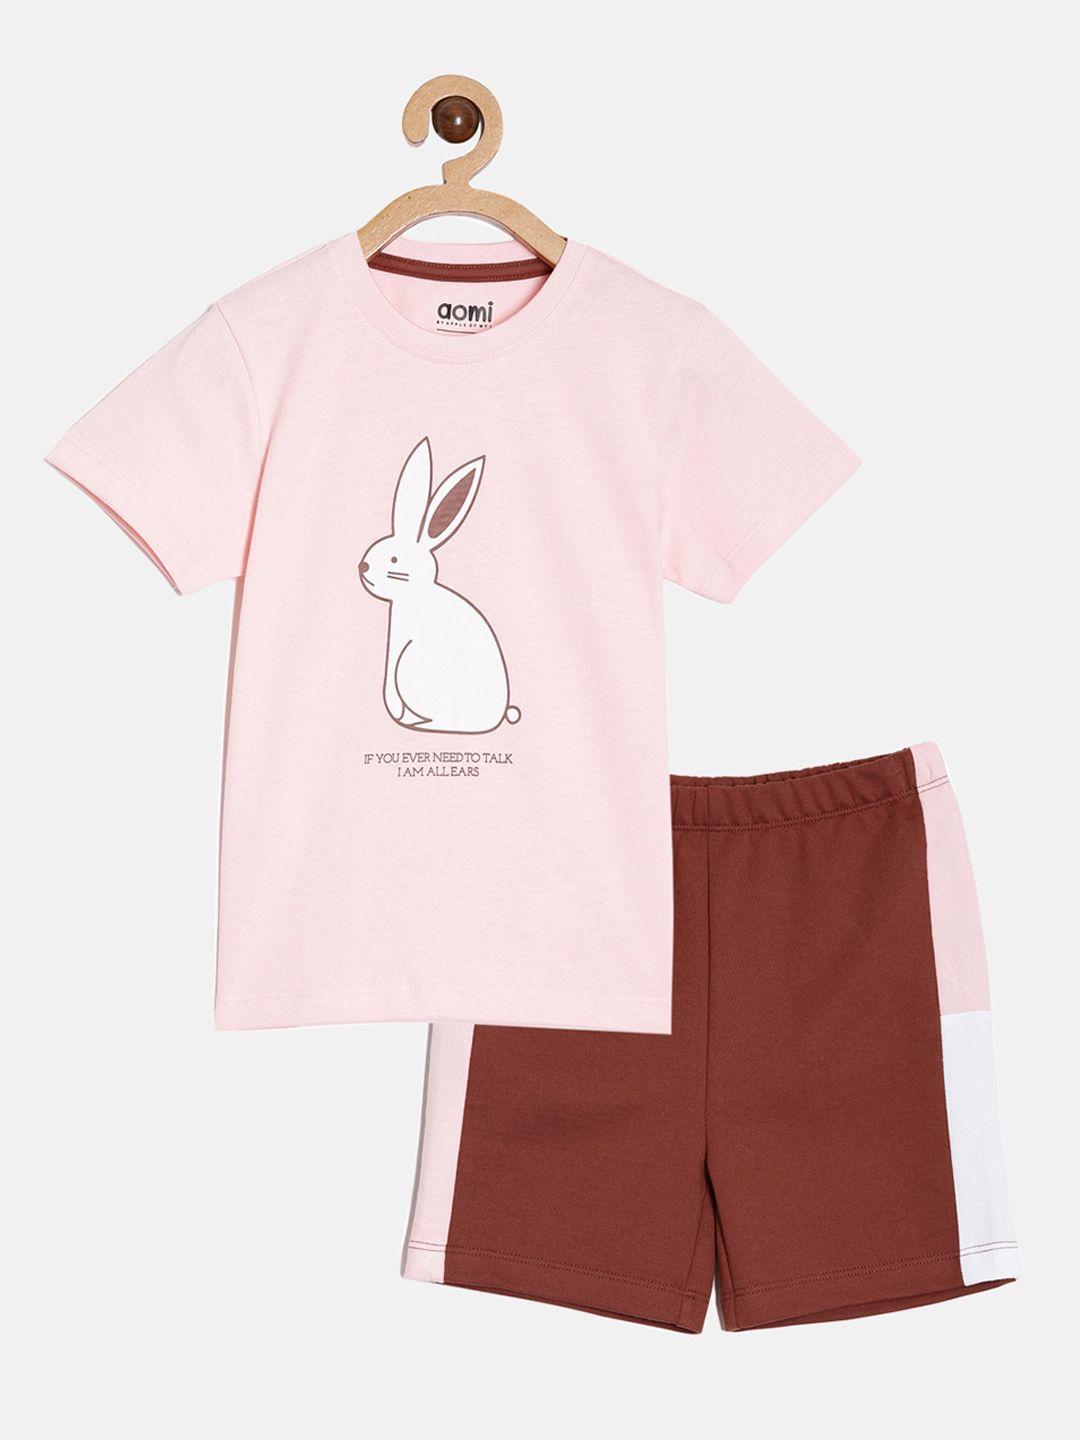 Aomi Boys Pink & Brown Printed T-shirt with Shorts